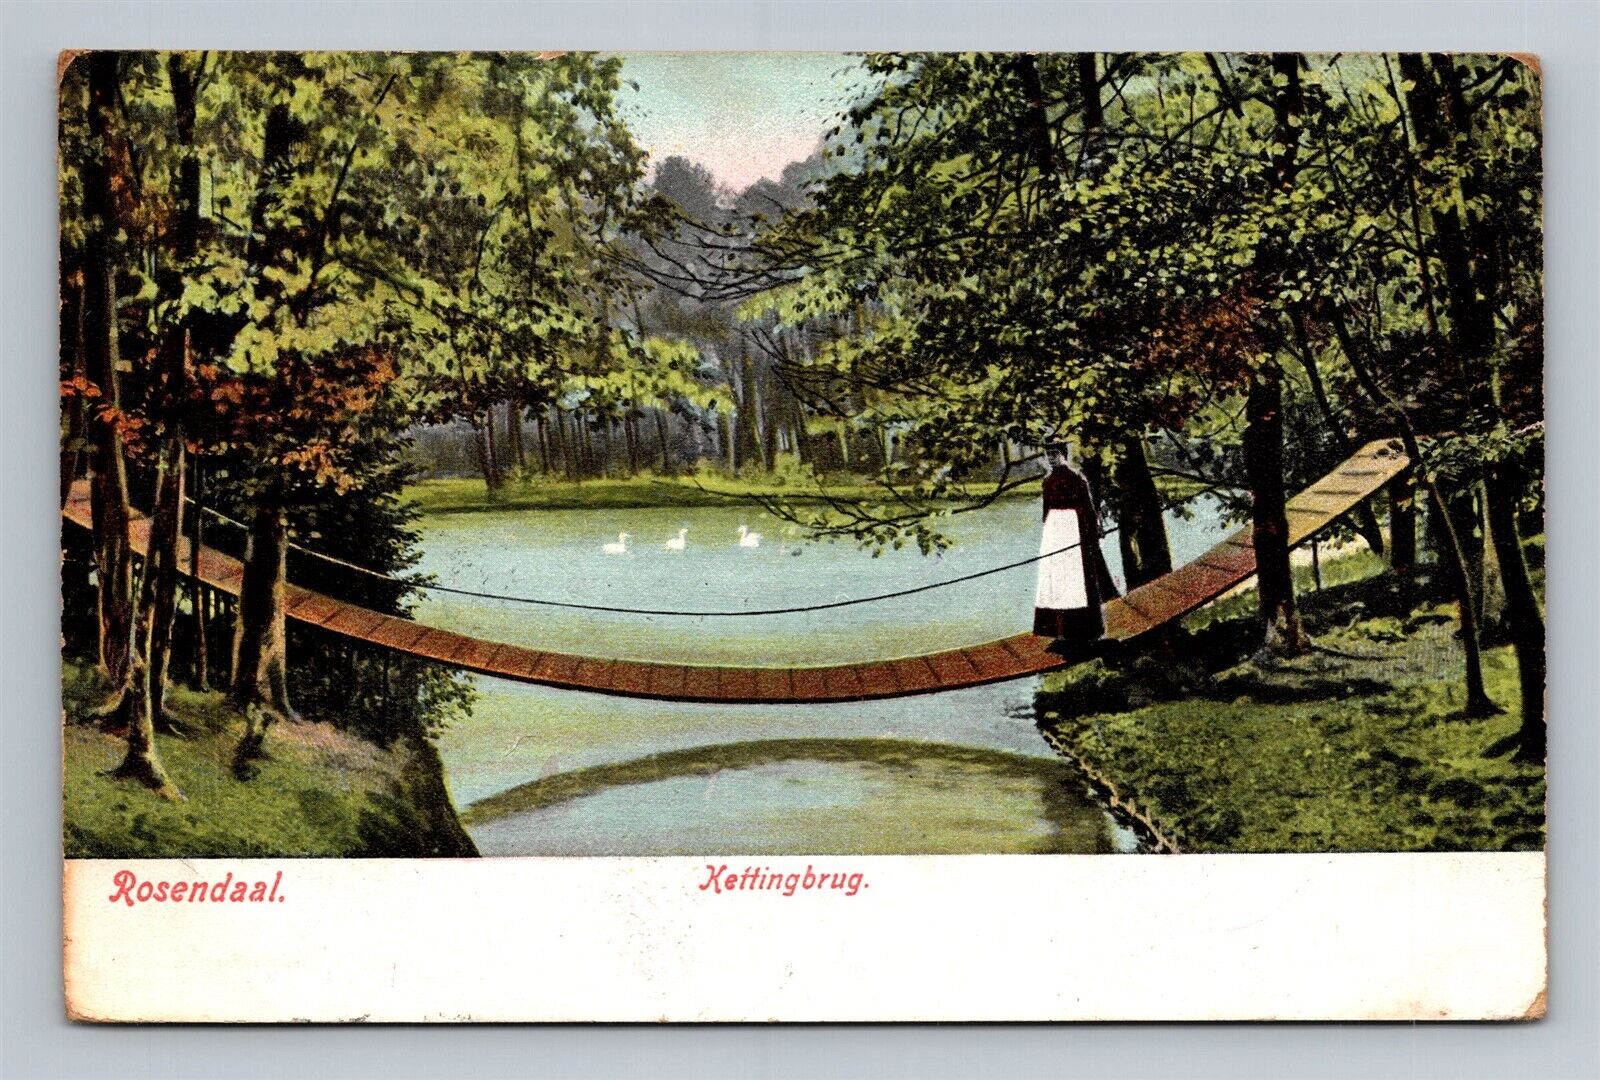 Kettingbrug Rosendaal Rozendaal Netherlands Wooden Bridge Old Postcard 1900s